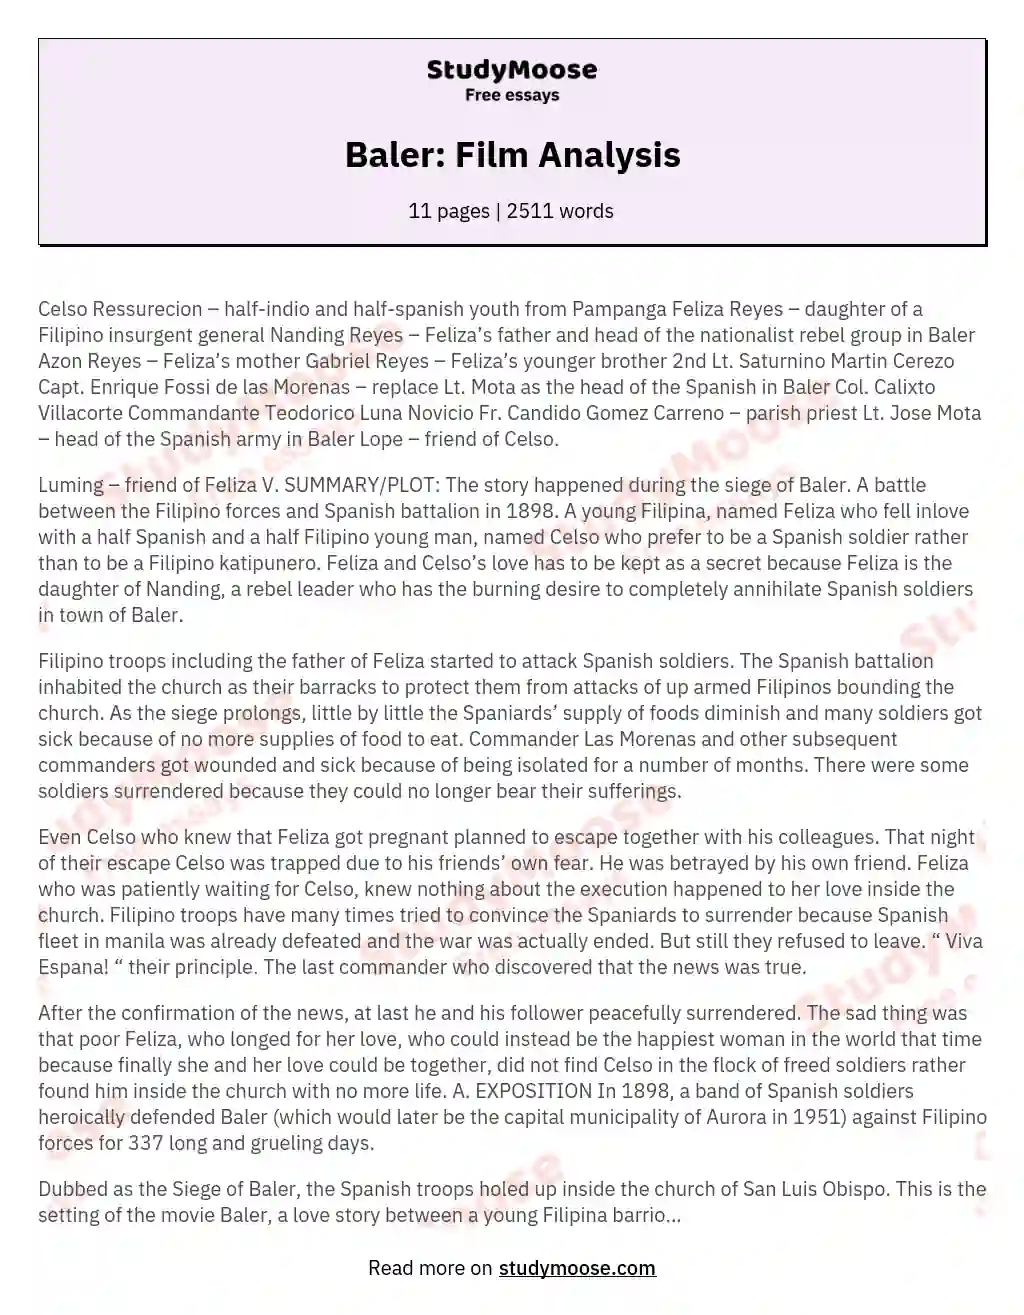 Baler: Film Analysis essay